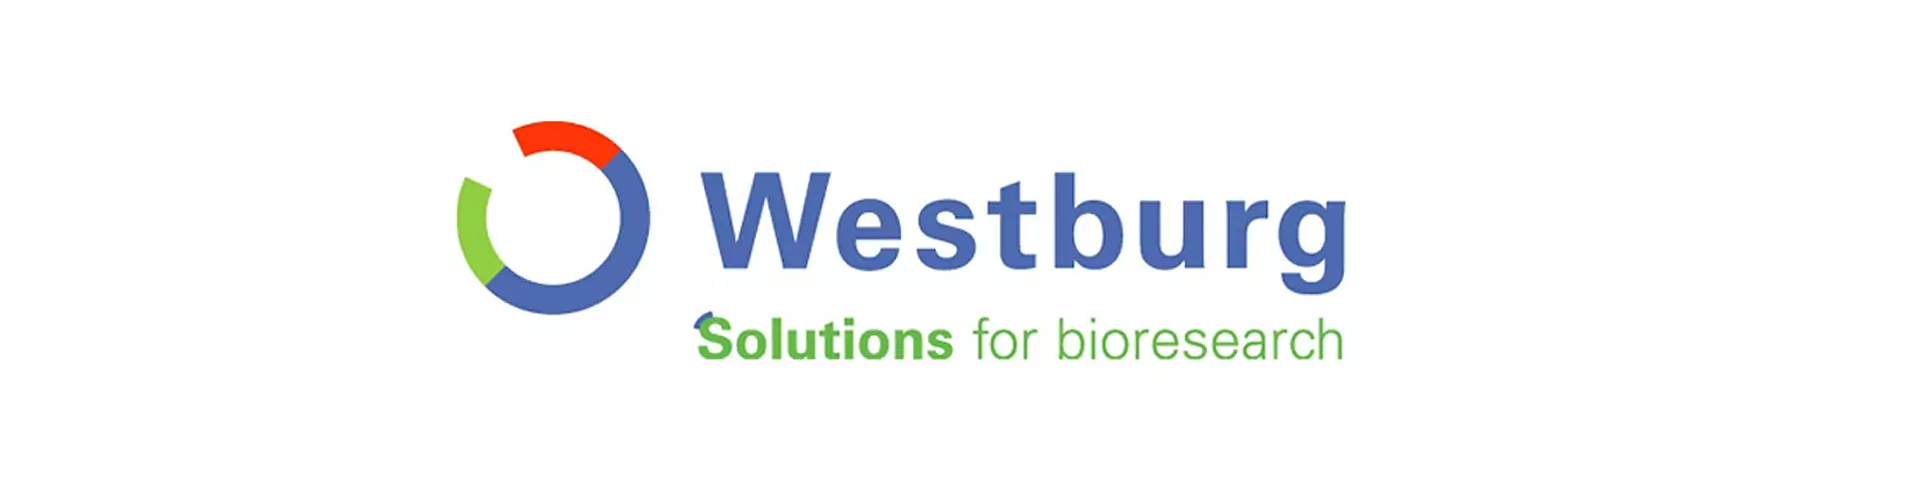 Lab Services en Westburg: Geautomatiseerde RNA-extractie